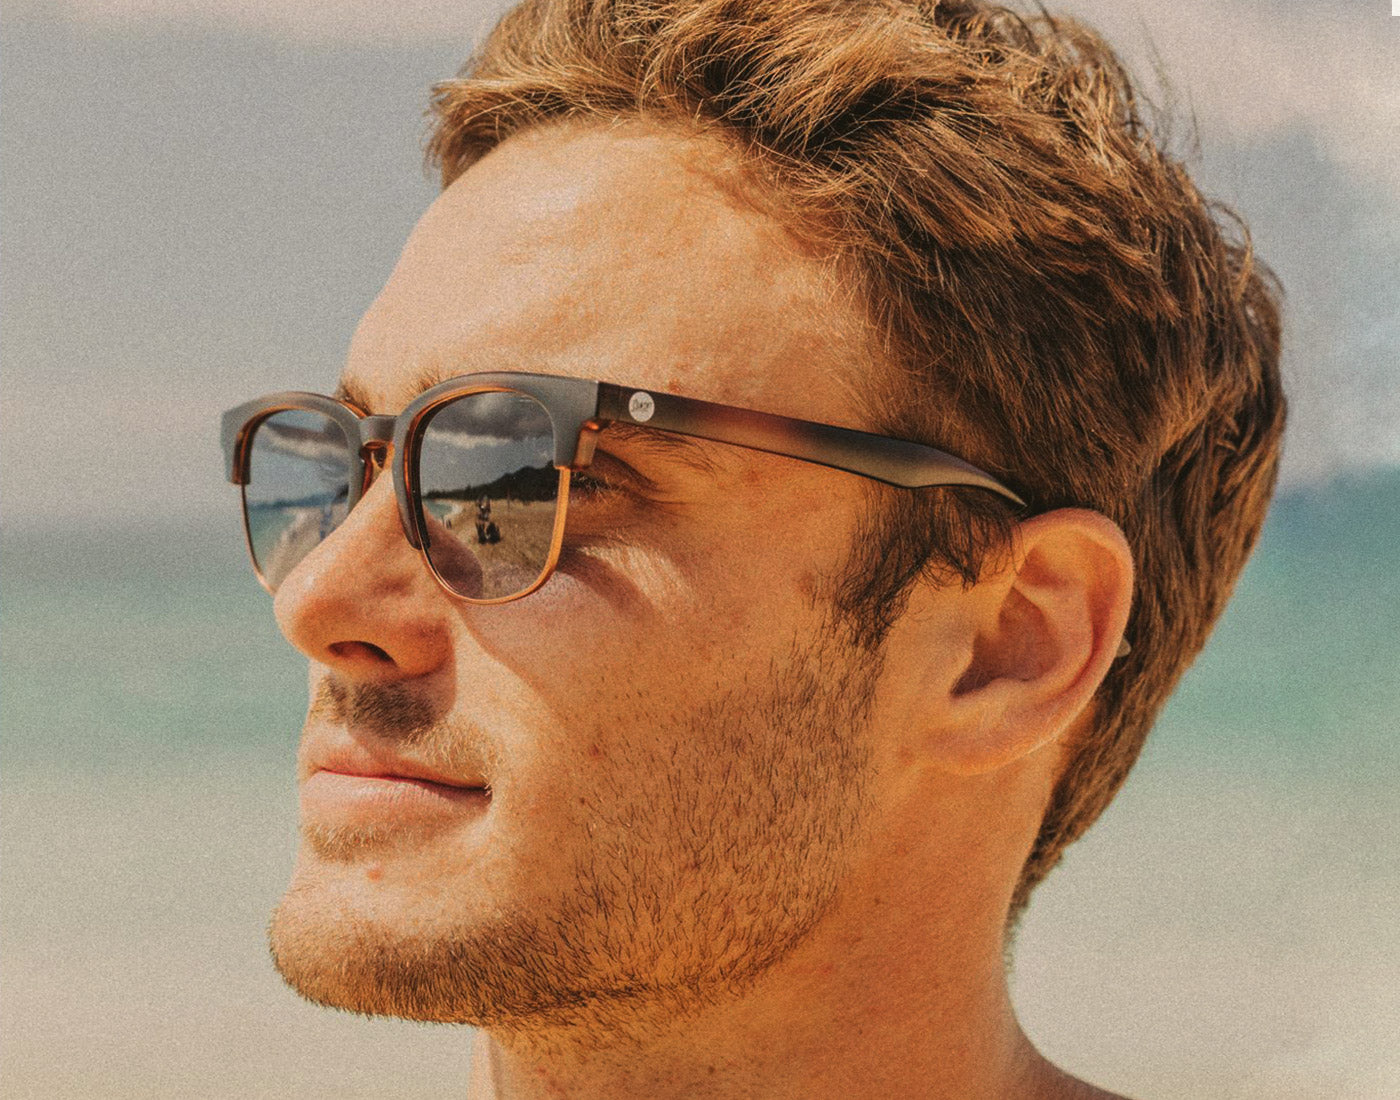 profile of man wearing sunski cambria sunglasses